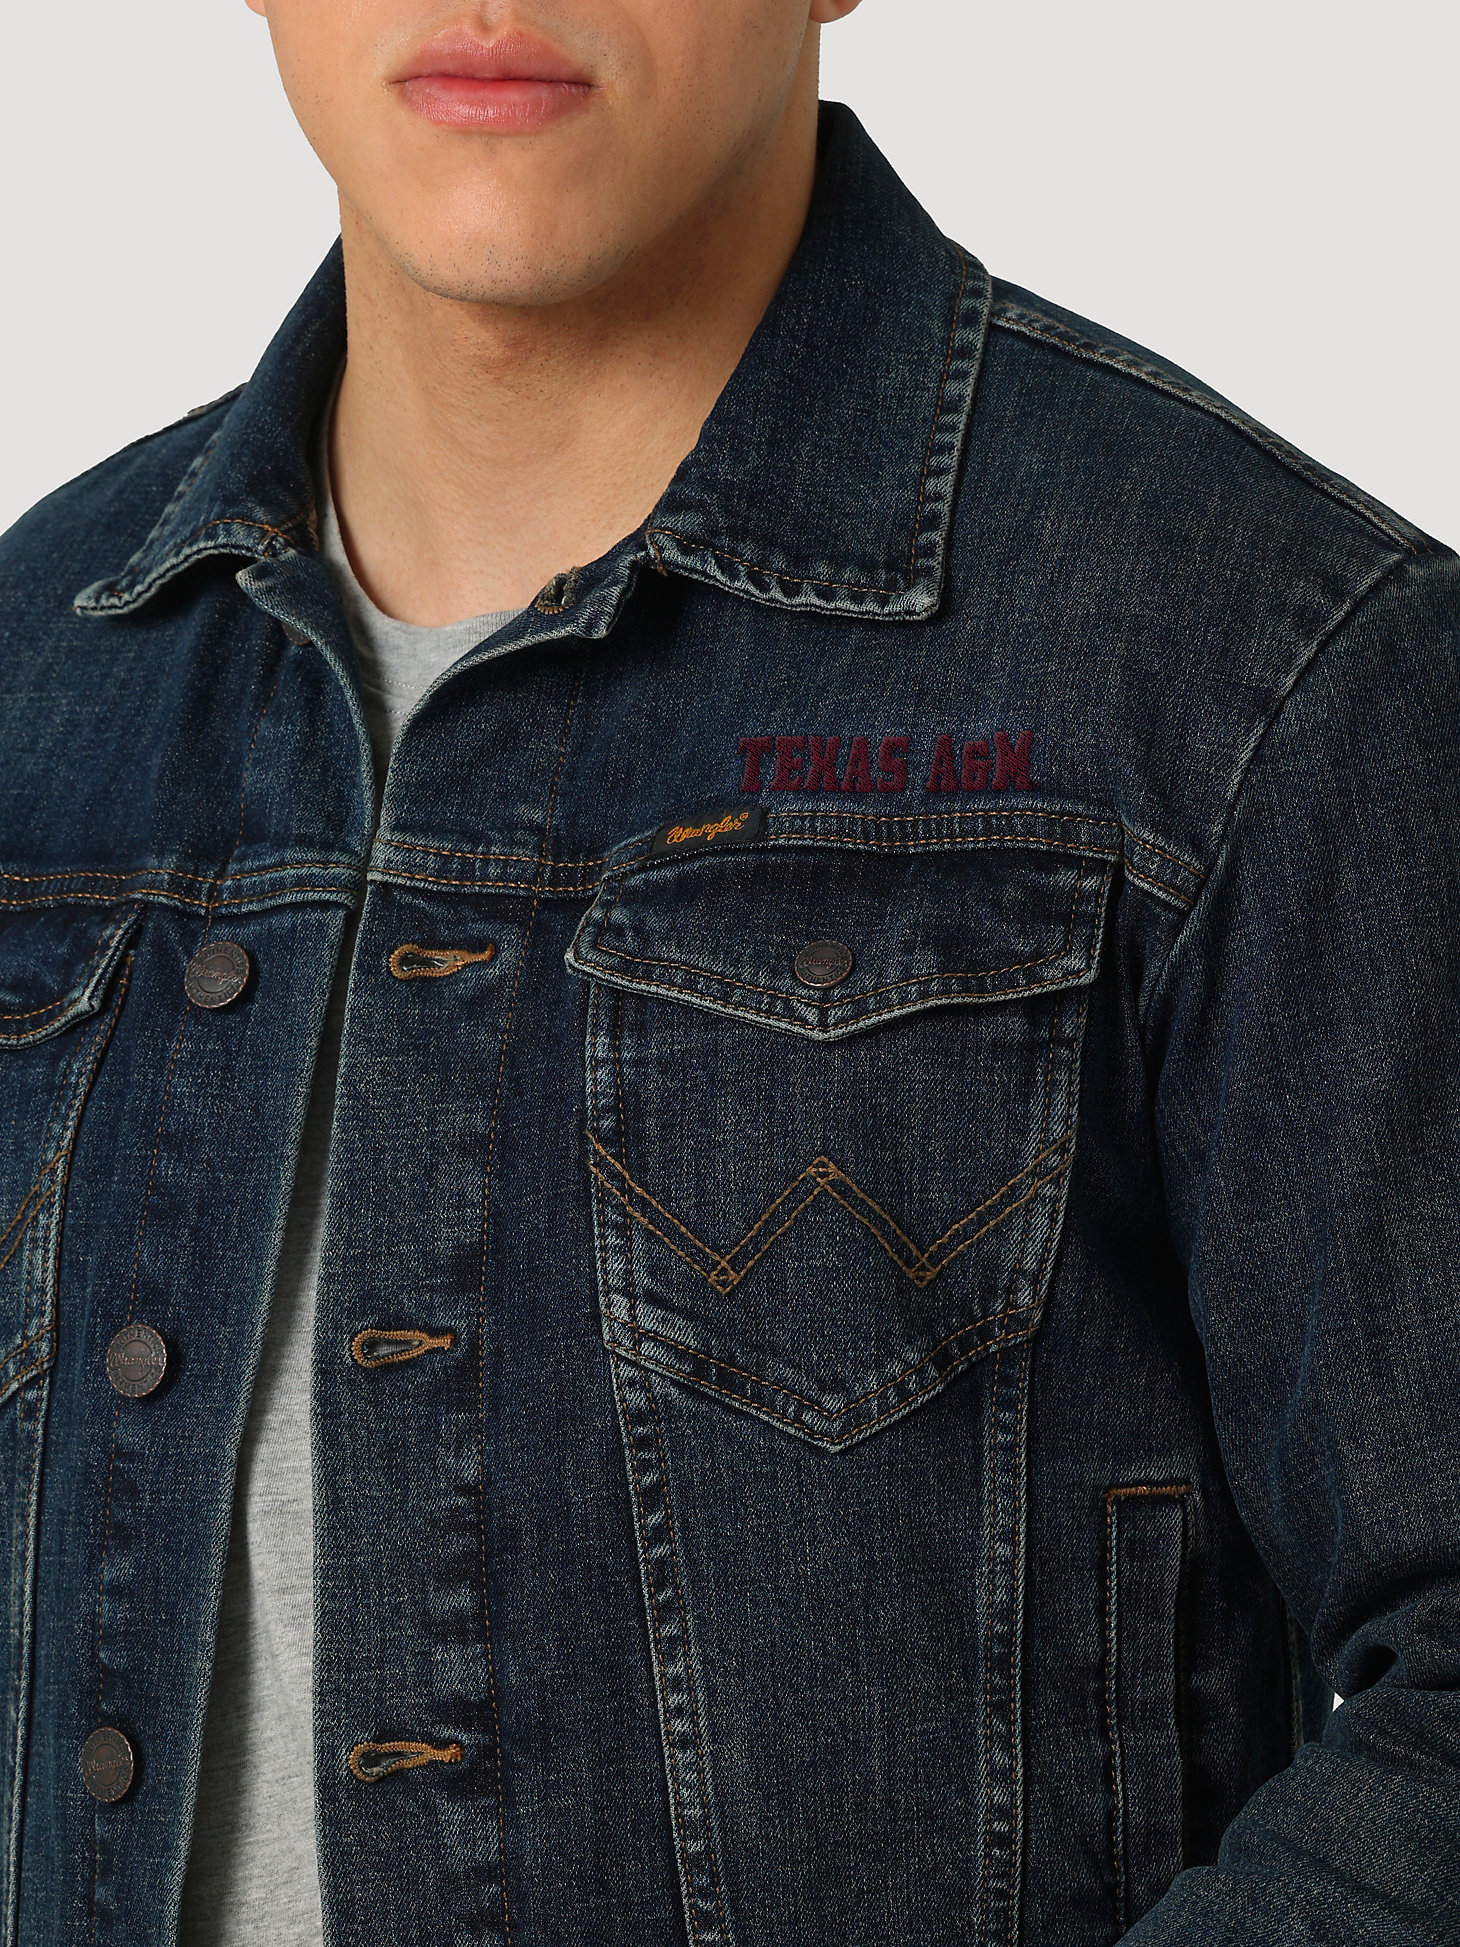 Men's Wrangler Retro Collegiate Embroidered Denim Jacket in Texas A&M alternative view 2